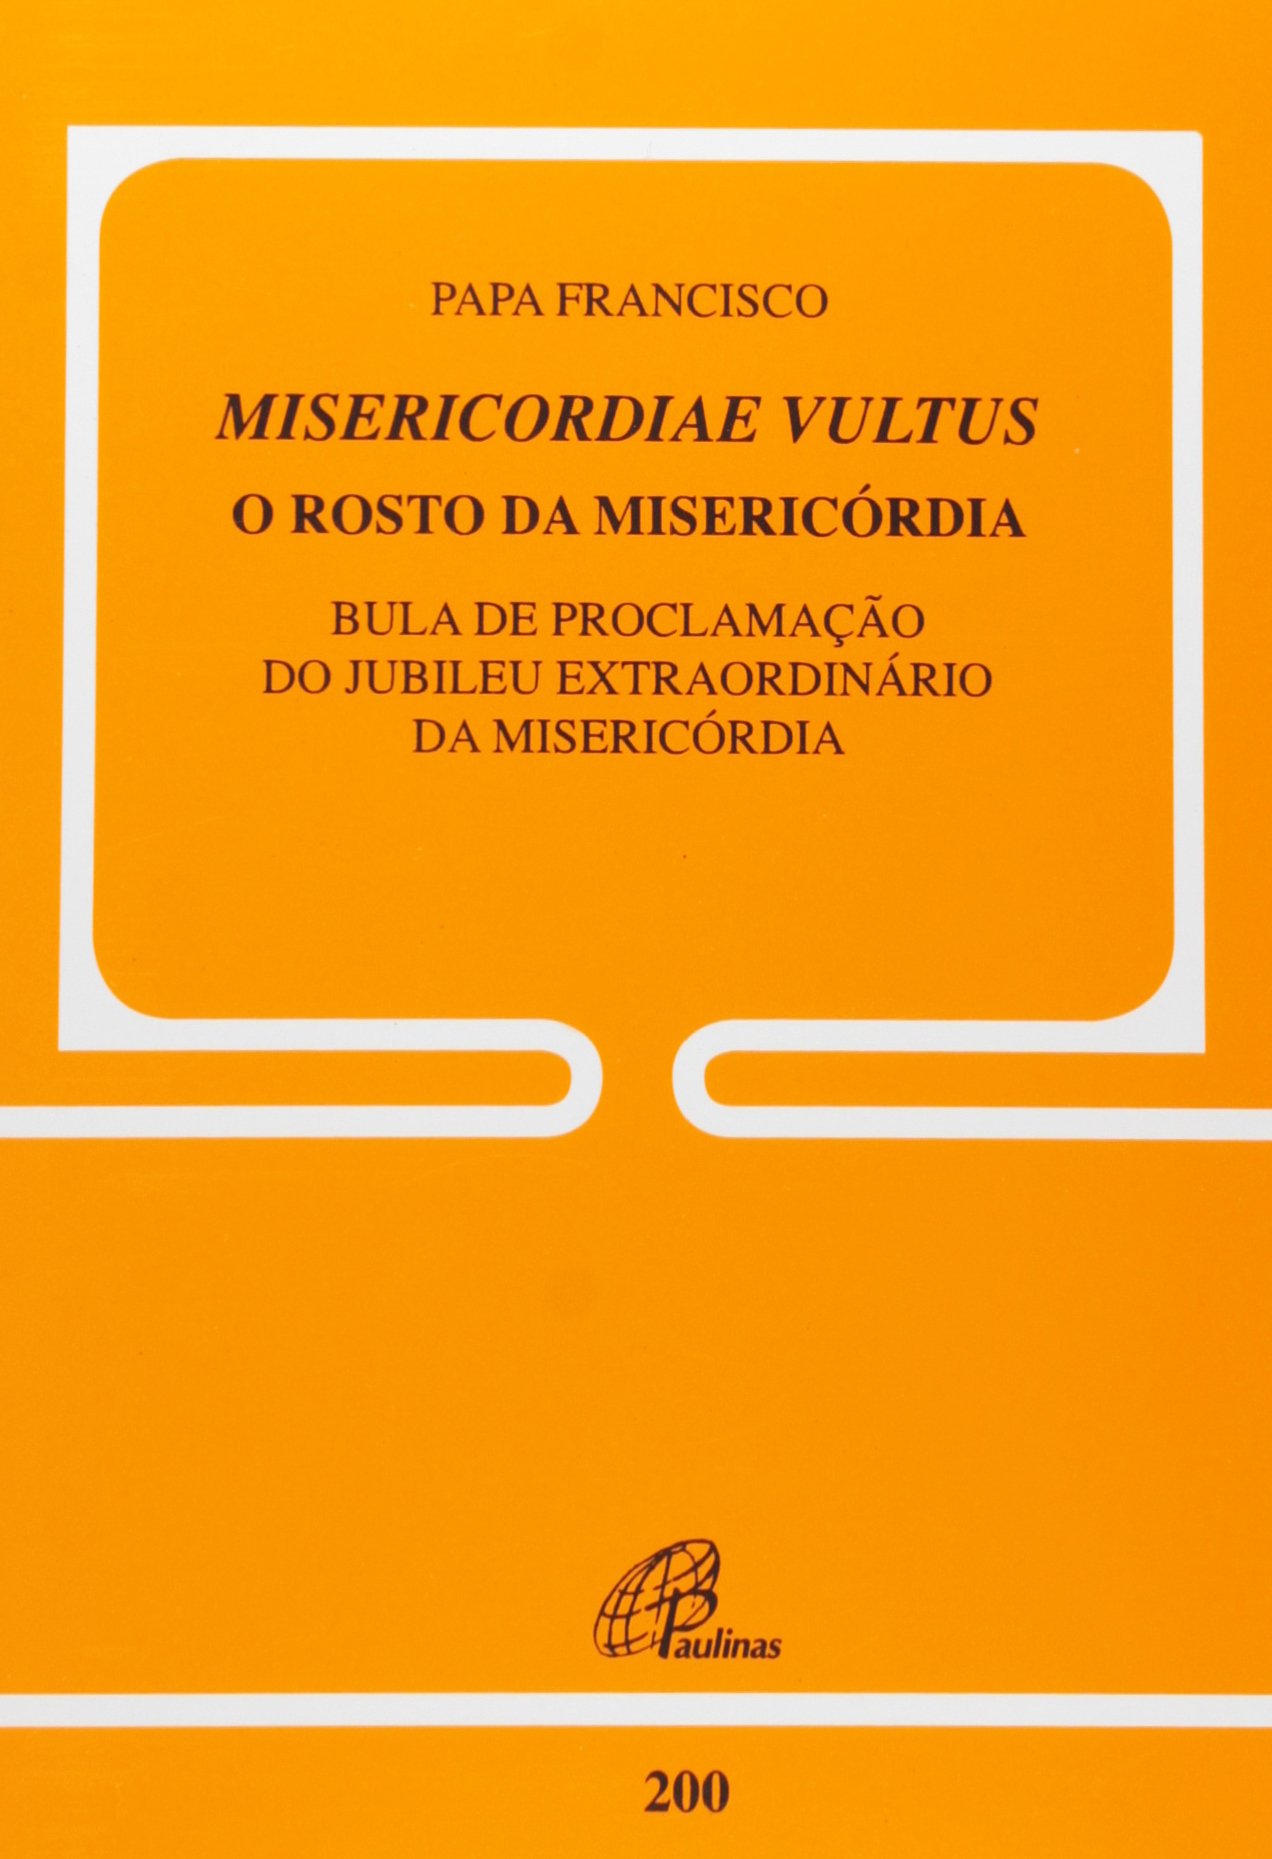 9788535639278 - MISERICORDIAE VULTUS O ROSTO DA MISERICORDIA 30G EDITORA PAULINAS